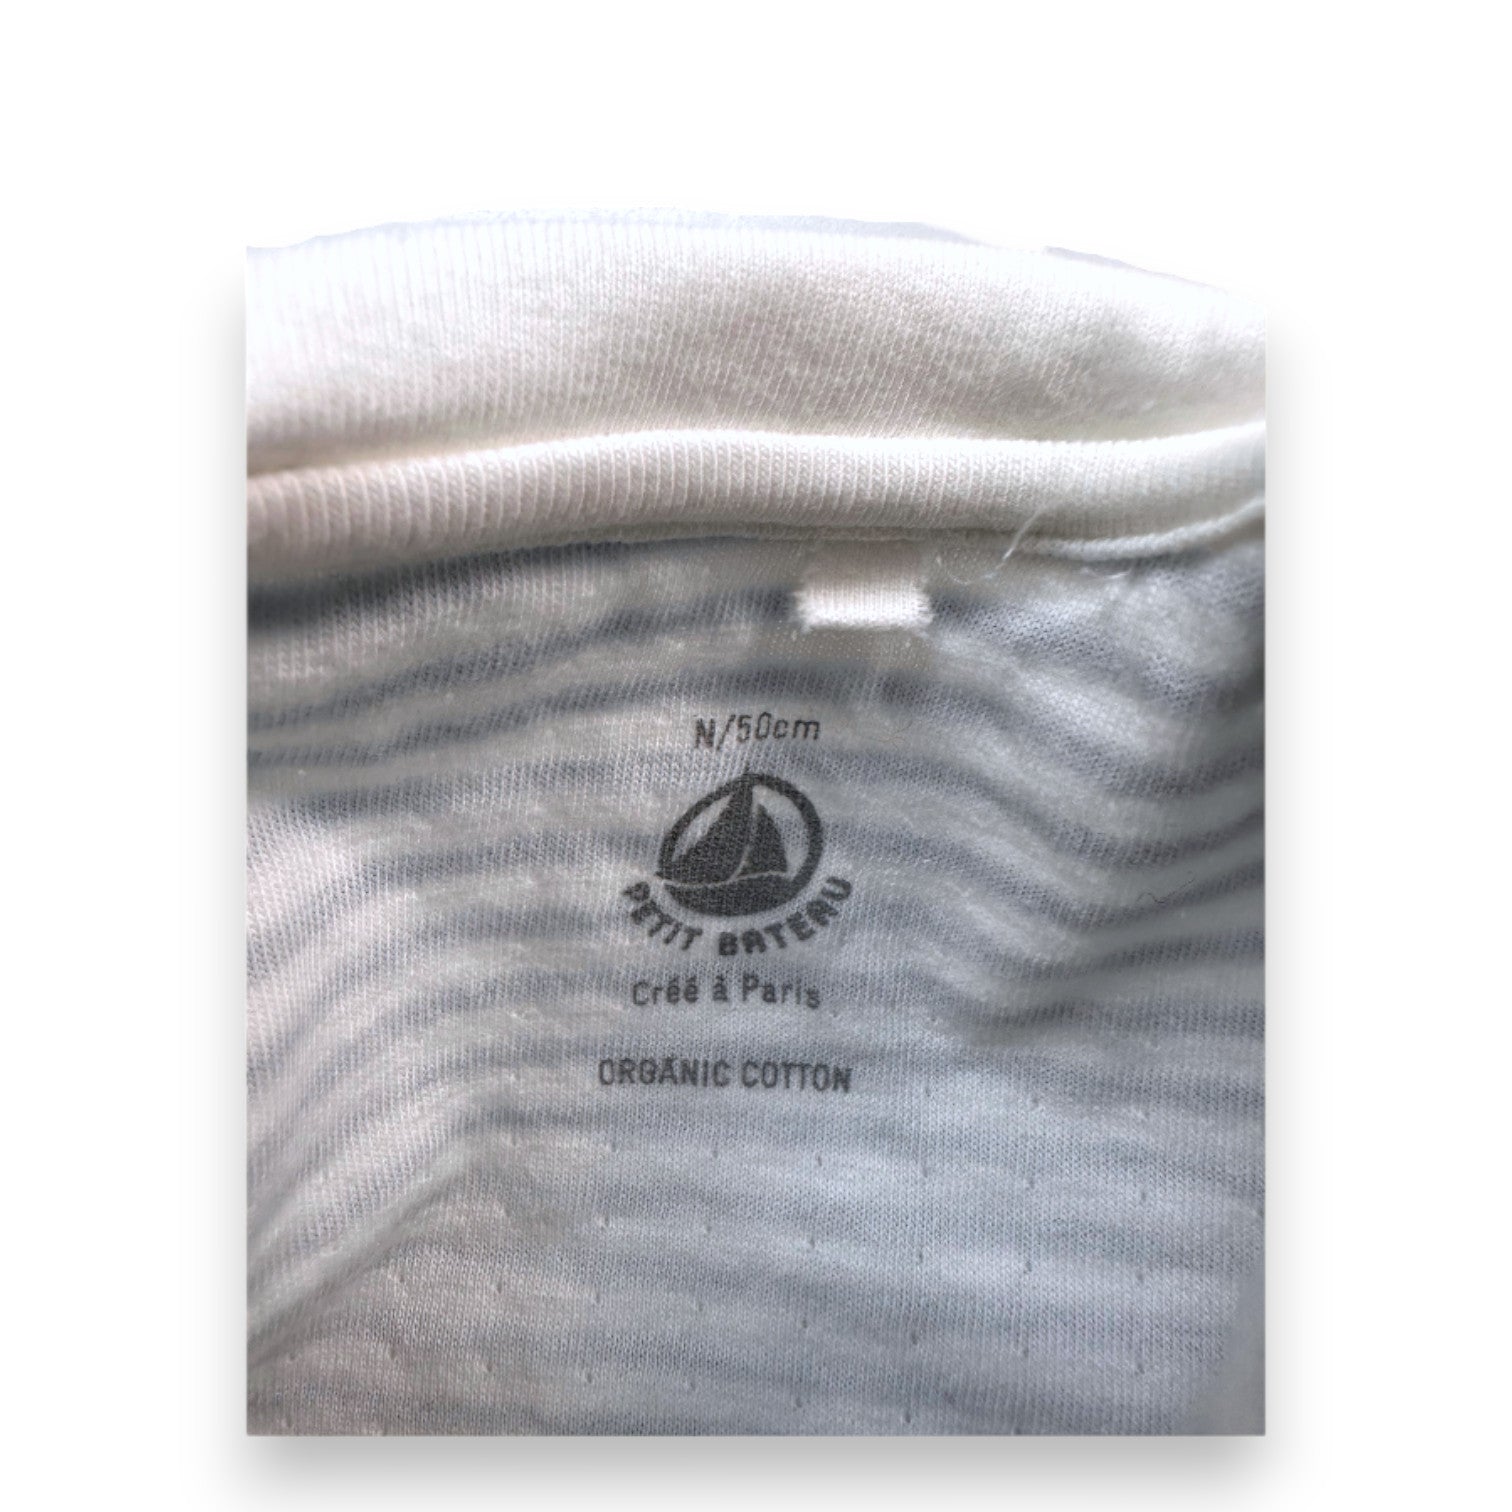 PETIT BATEAU - Pyjama bleu et blanc à rayures - 0 mois